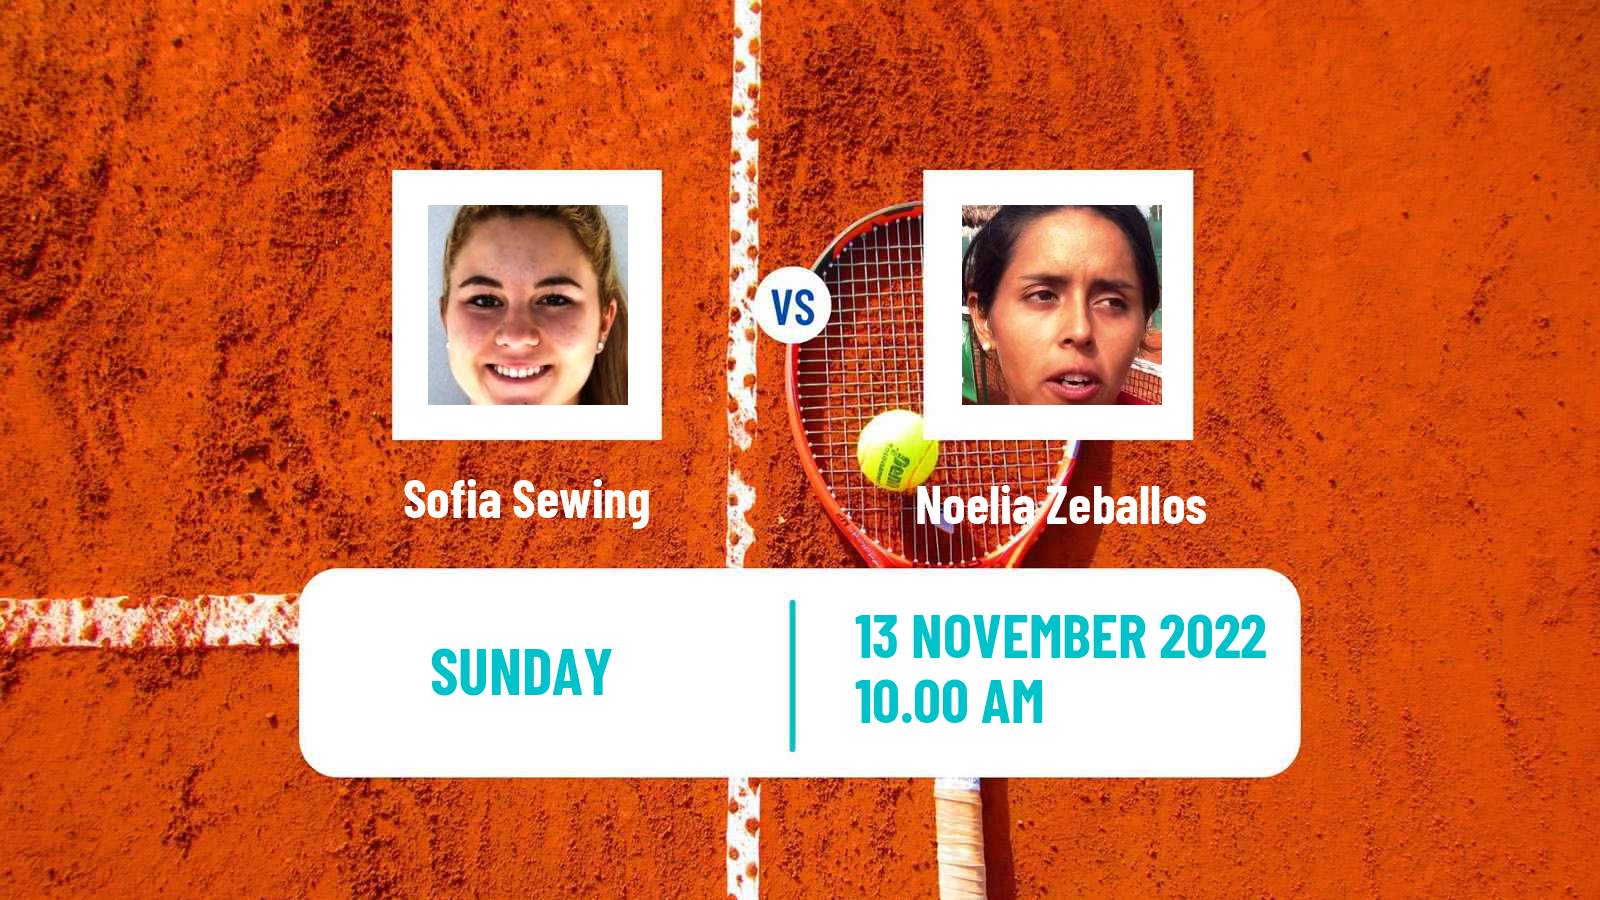 Tennis ITF Tournaments Sofia Sewing - Noelia Zeballos